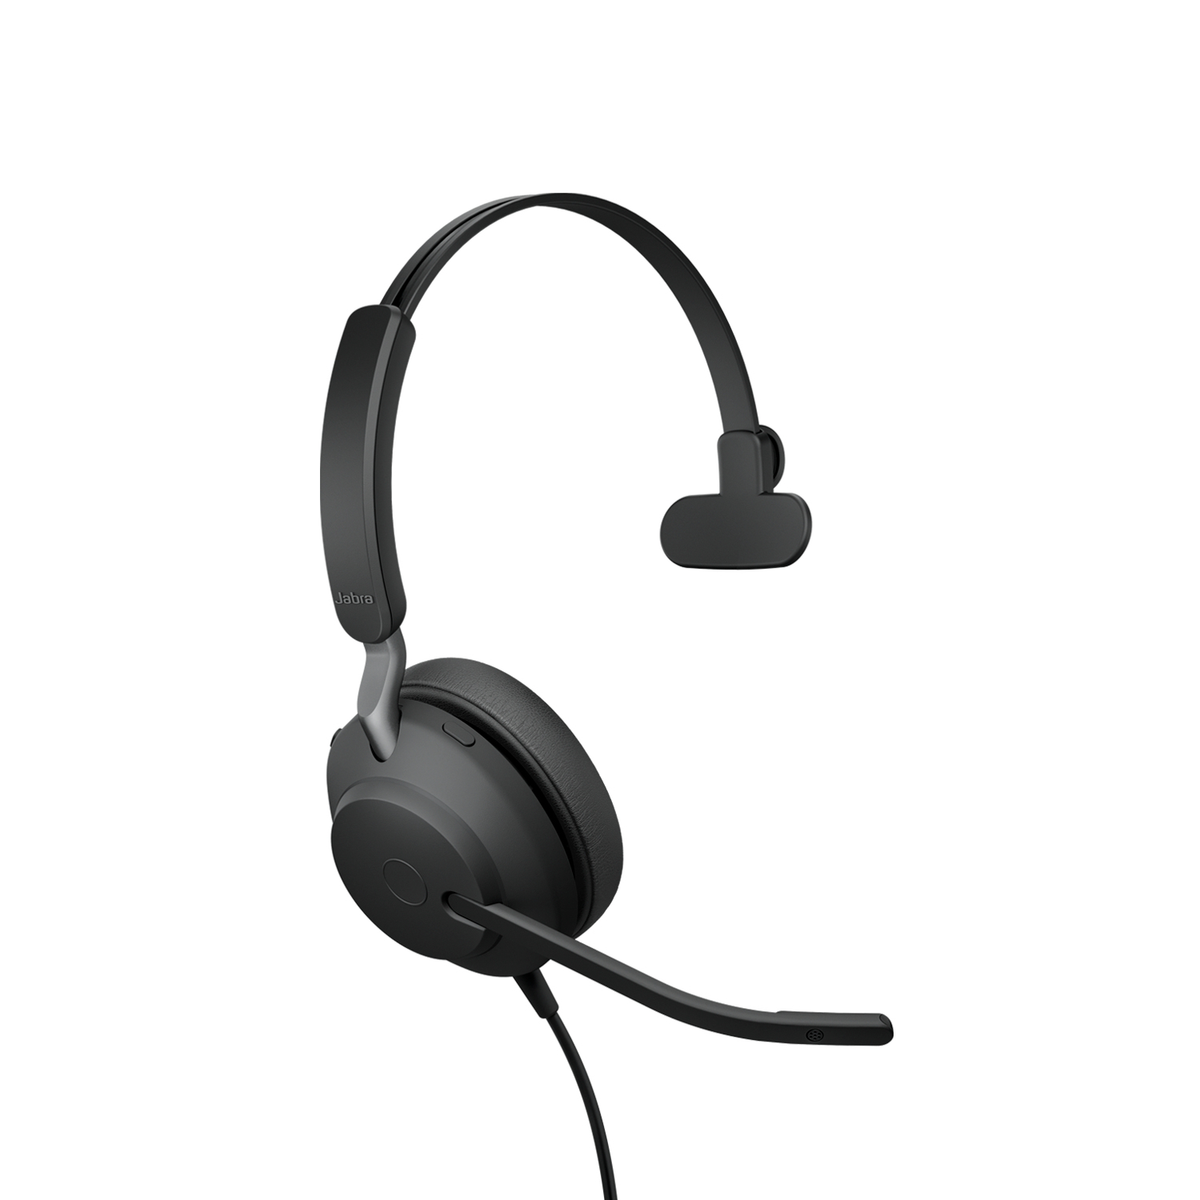 AUDIO On-ear Kopfhörer Bluetooth 24189-889-899, Schwarz GN